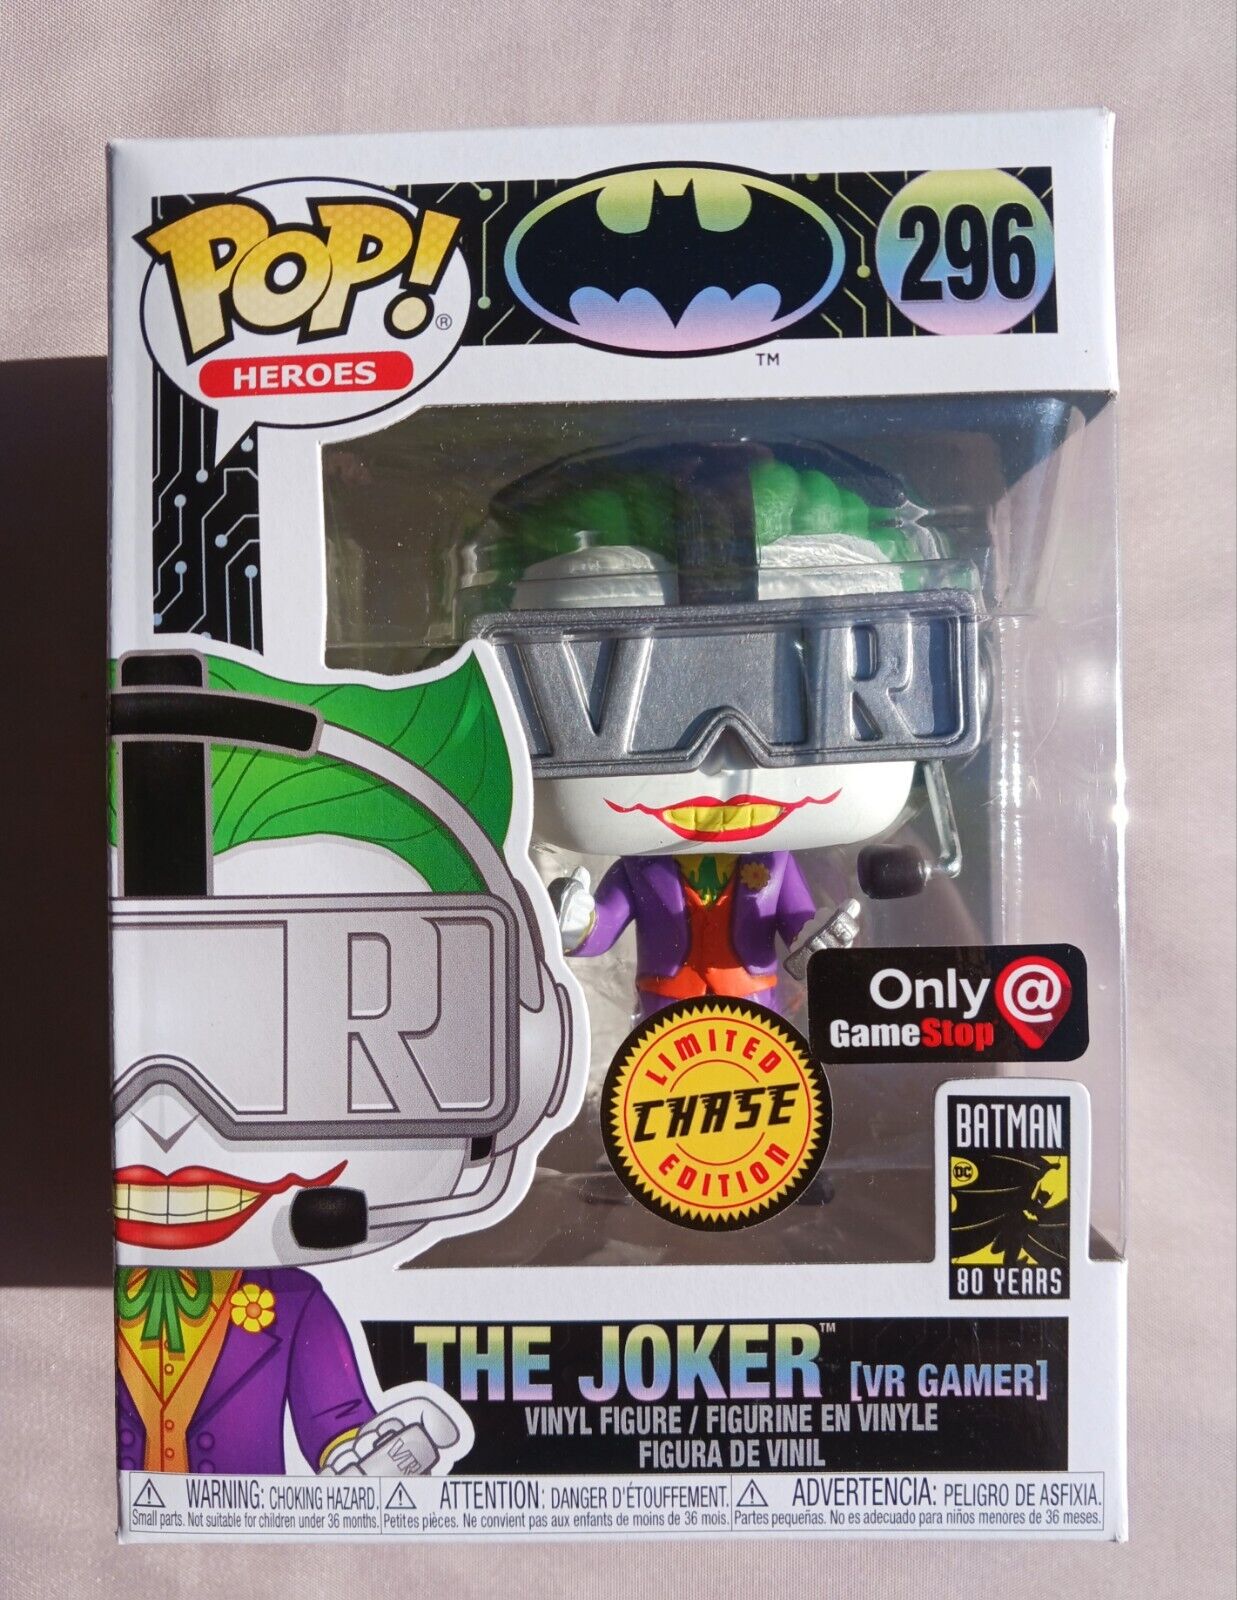 Funko Pop Heroes: DC Comics The Joker (VR Gamer) #296 Chase Edition GameStop